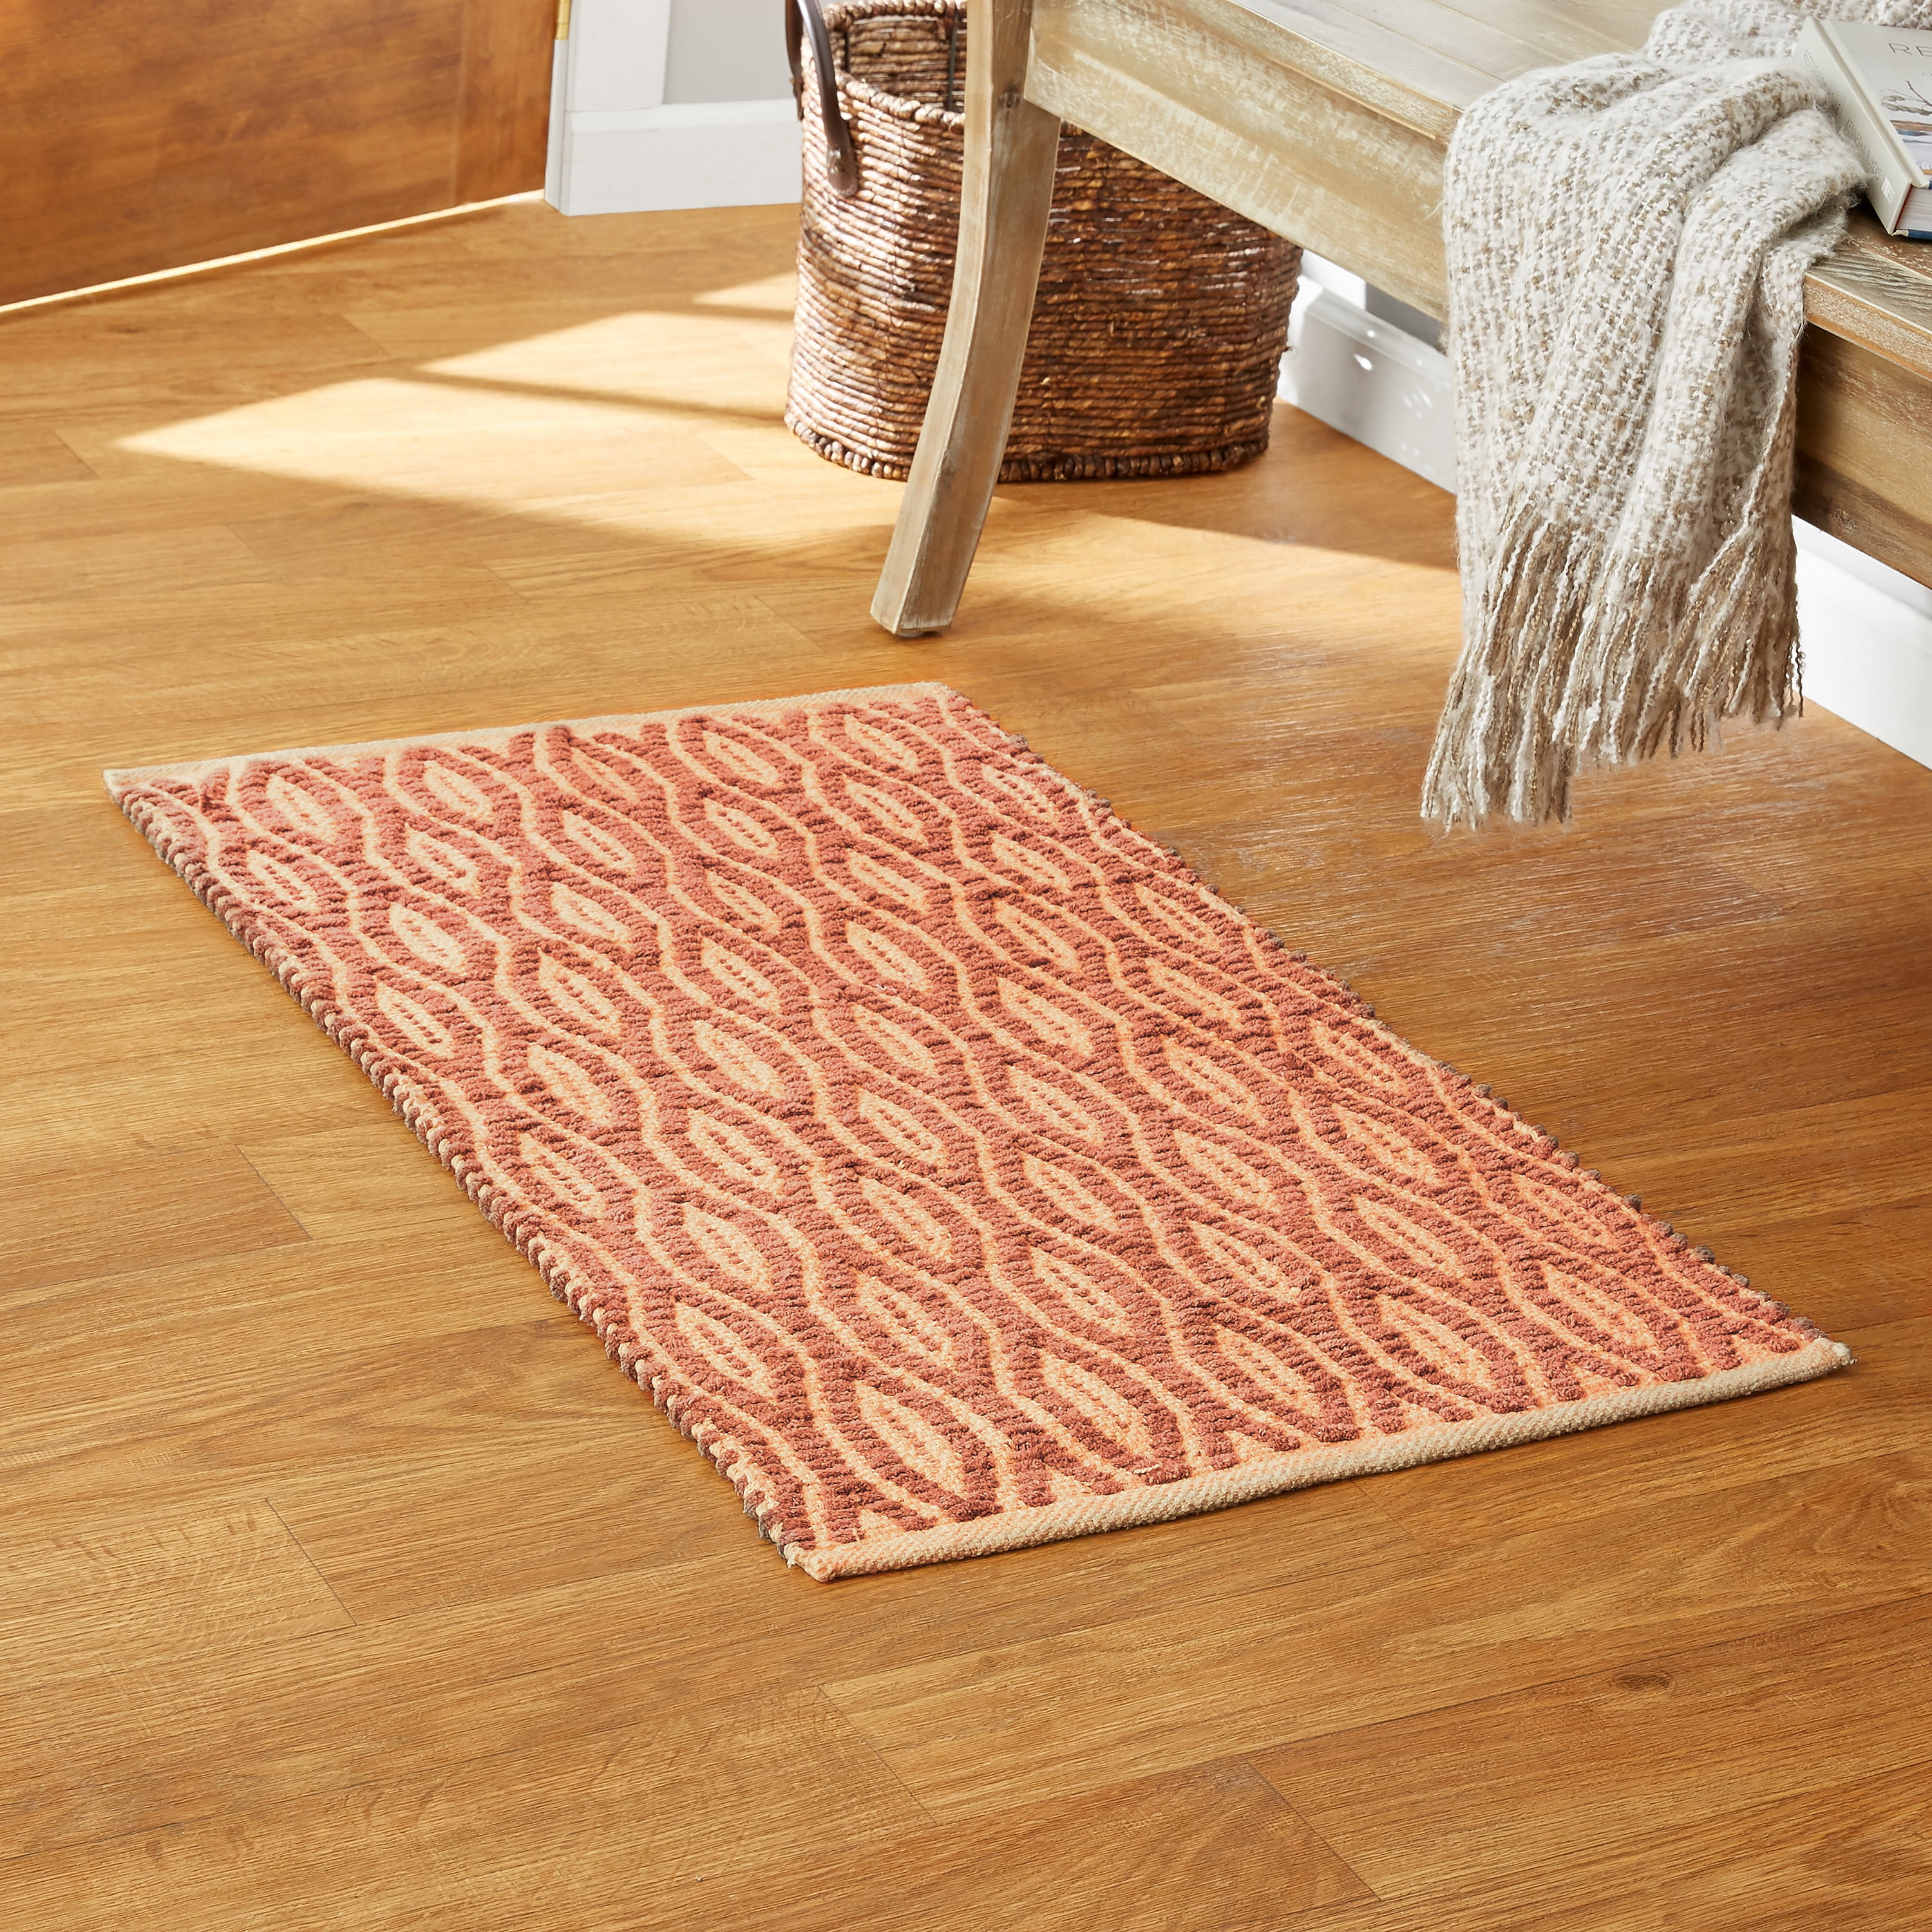 Indian Handmade Paper Shaggy/Chindi Accent Rug,Carpet,Floor Mat,Bathrug-24x36'' 